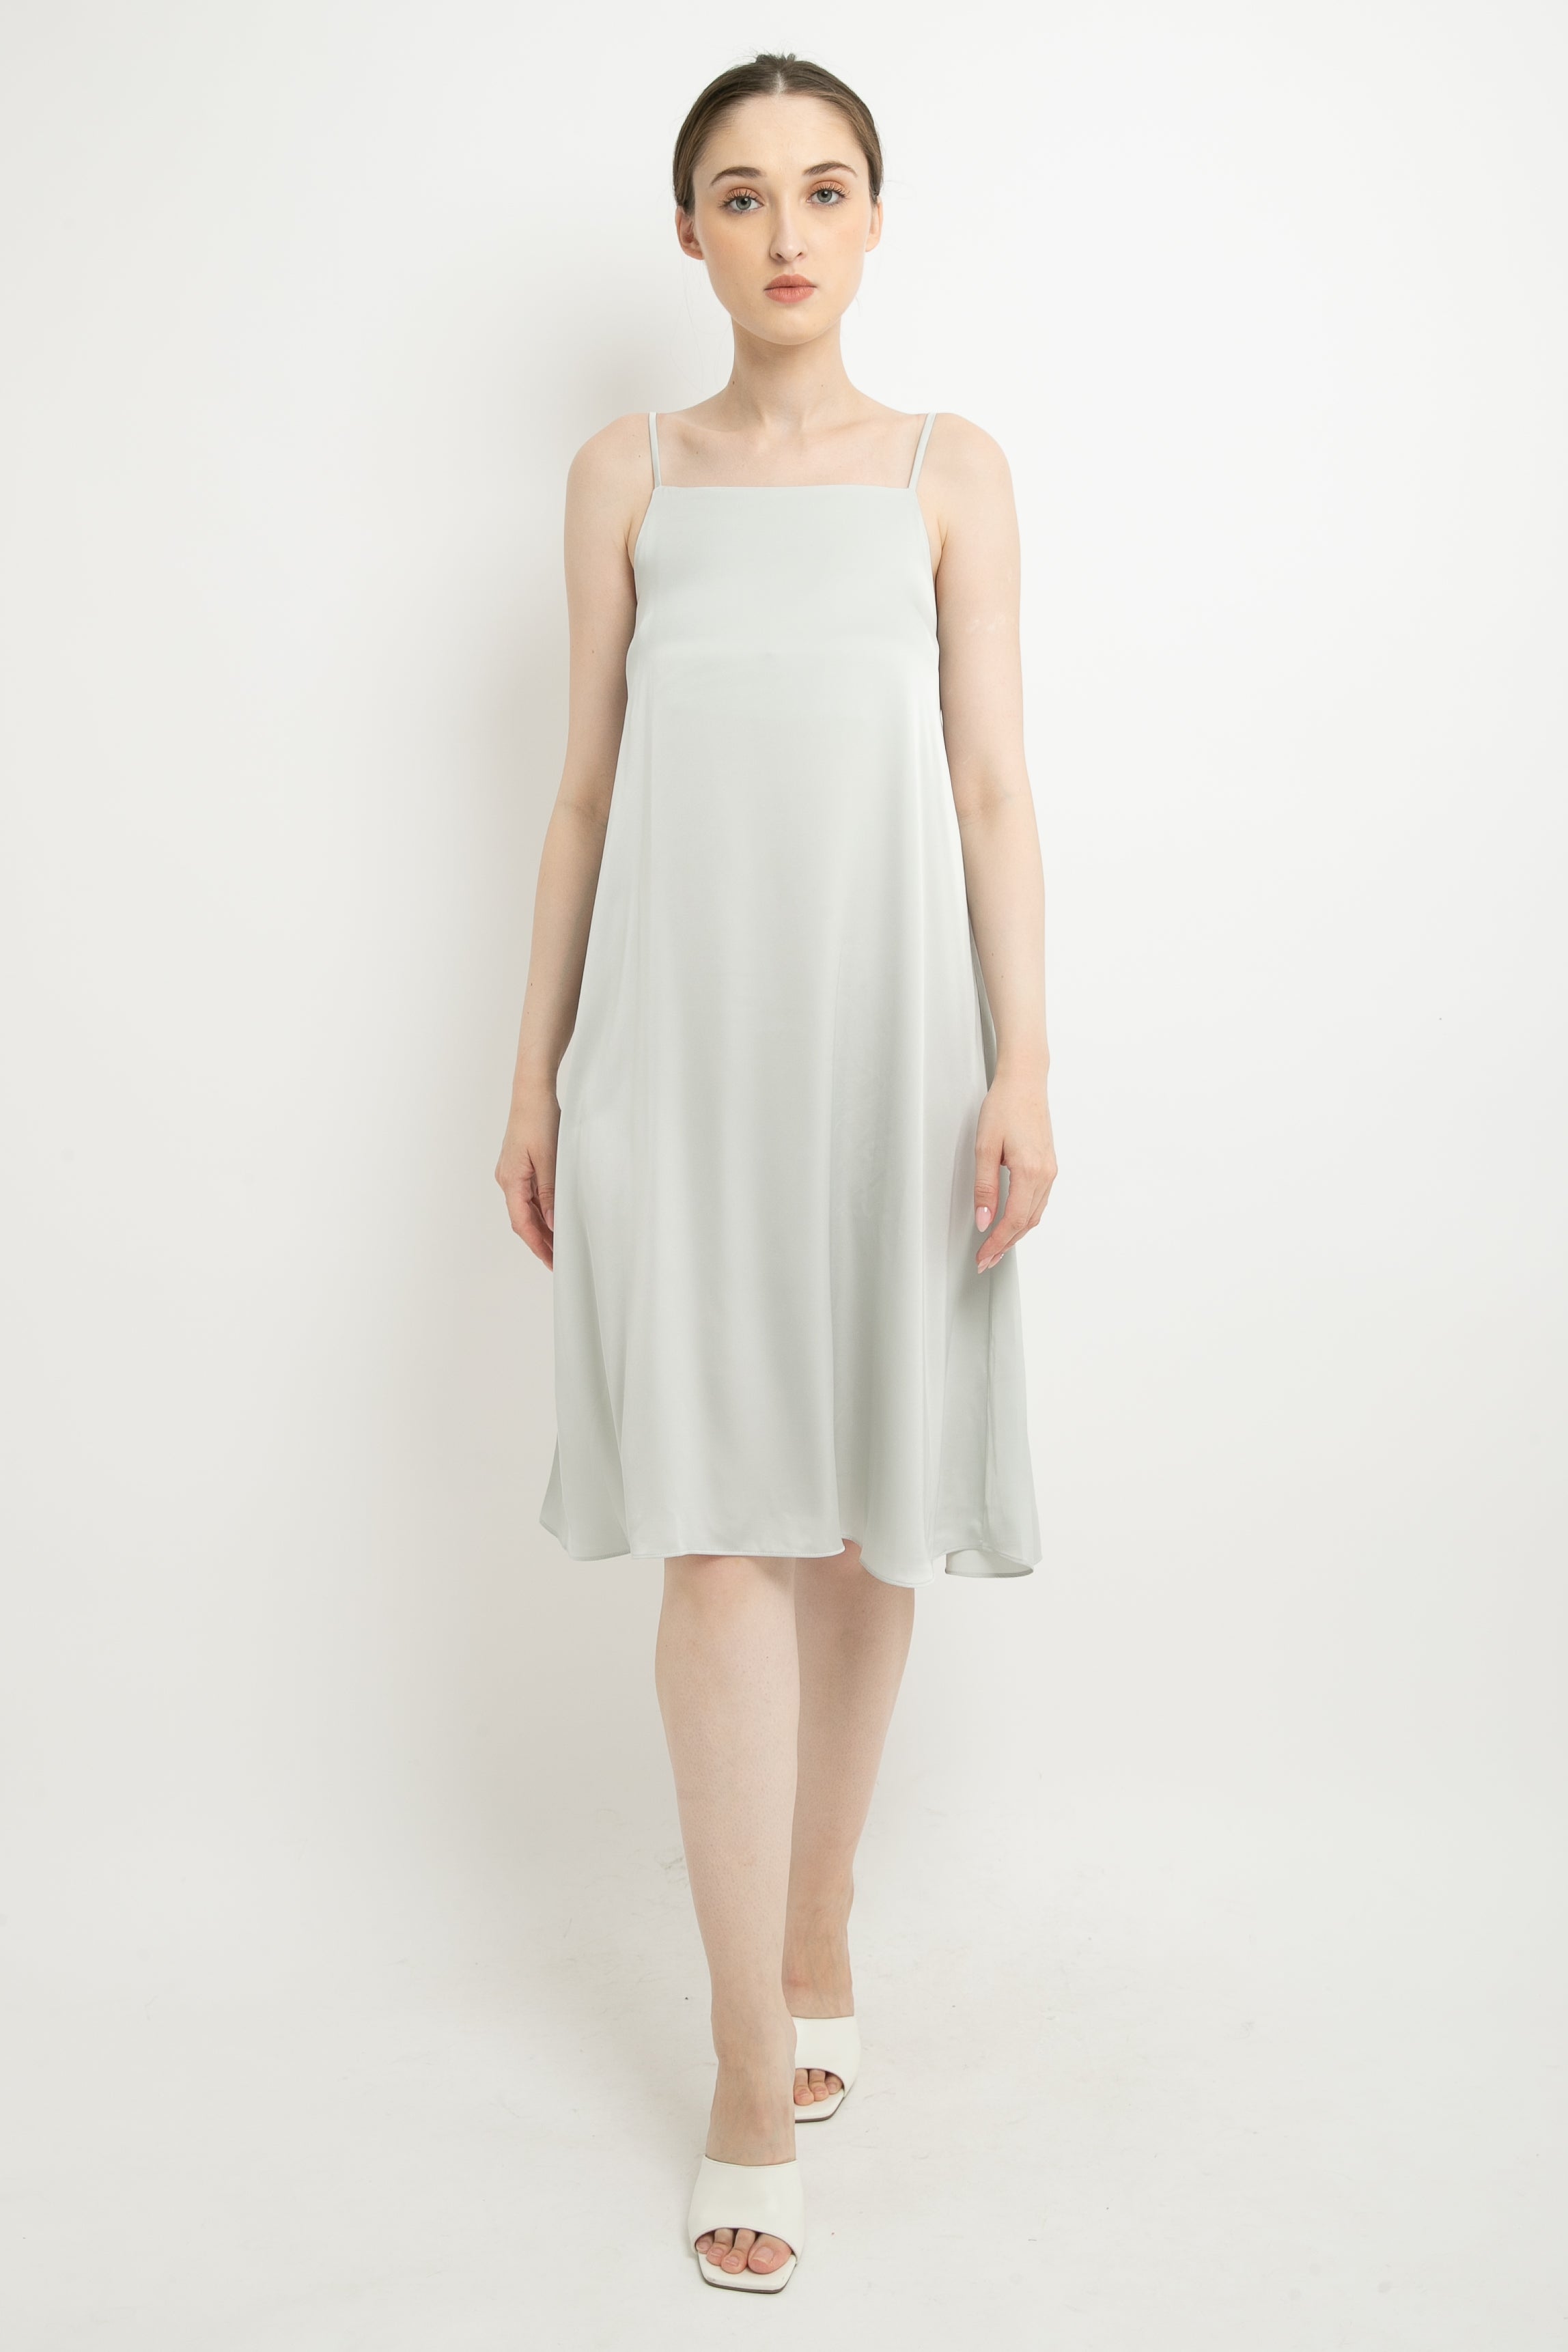 Camisole Dress in Grey by Aluna